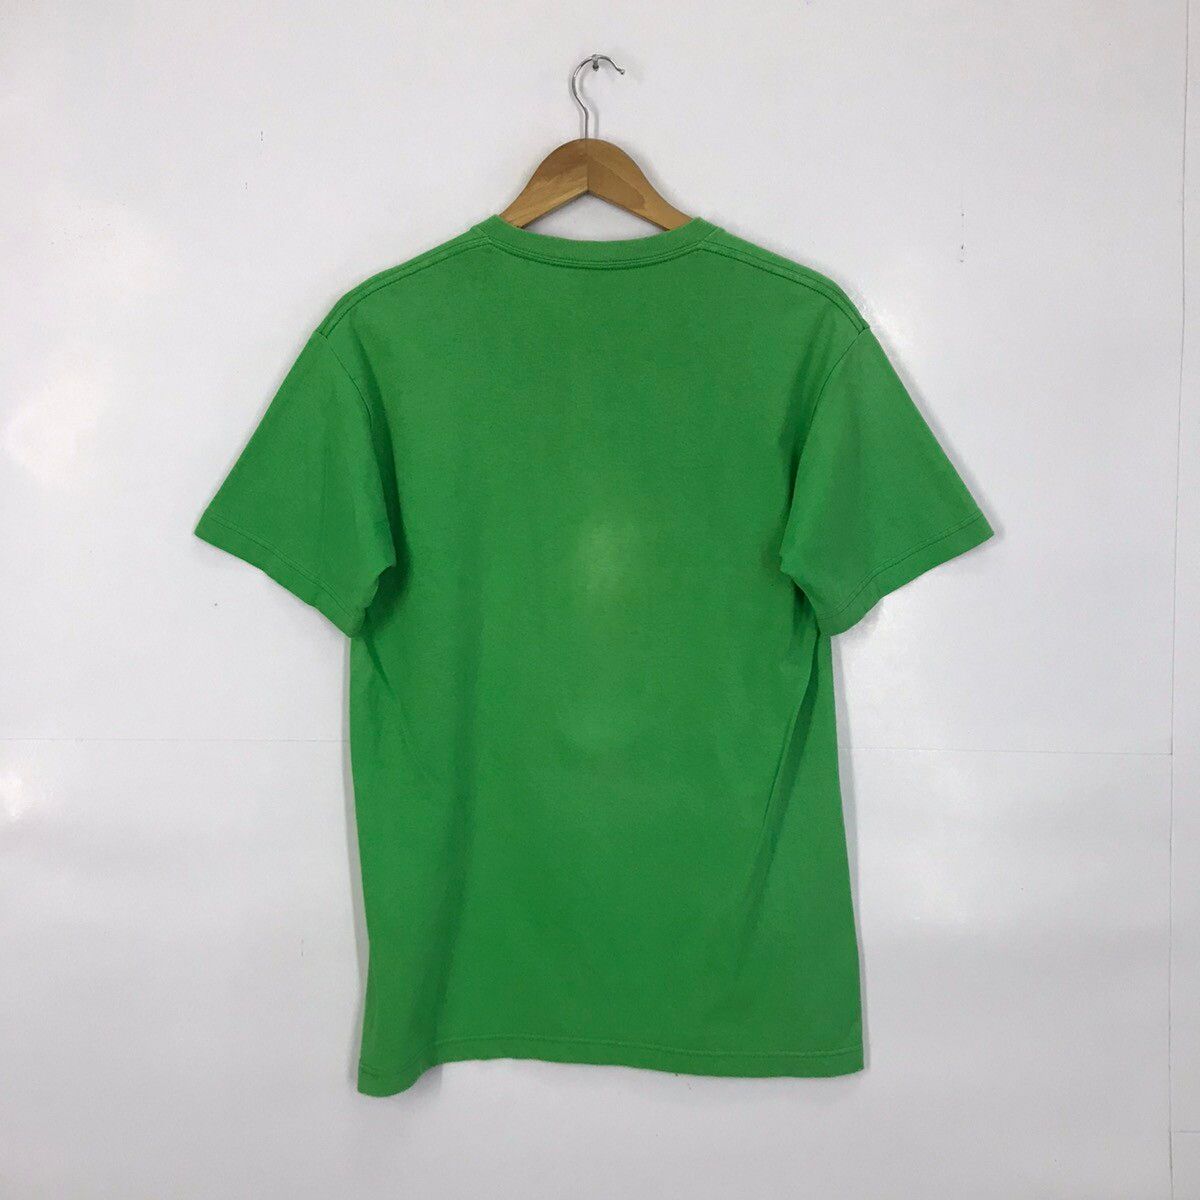 Stussy Vintage Stussy Green Rare Tshirts Size US M / EU 48-50 / 2 - 3 Thumbnail